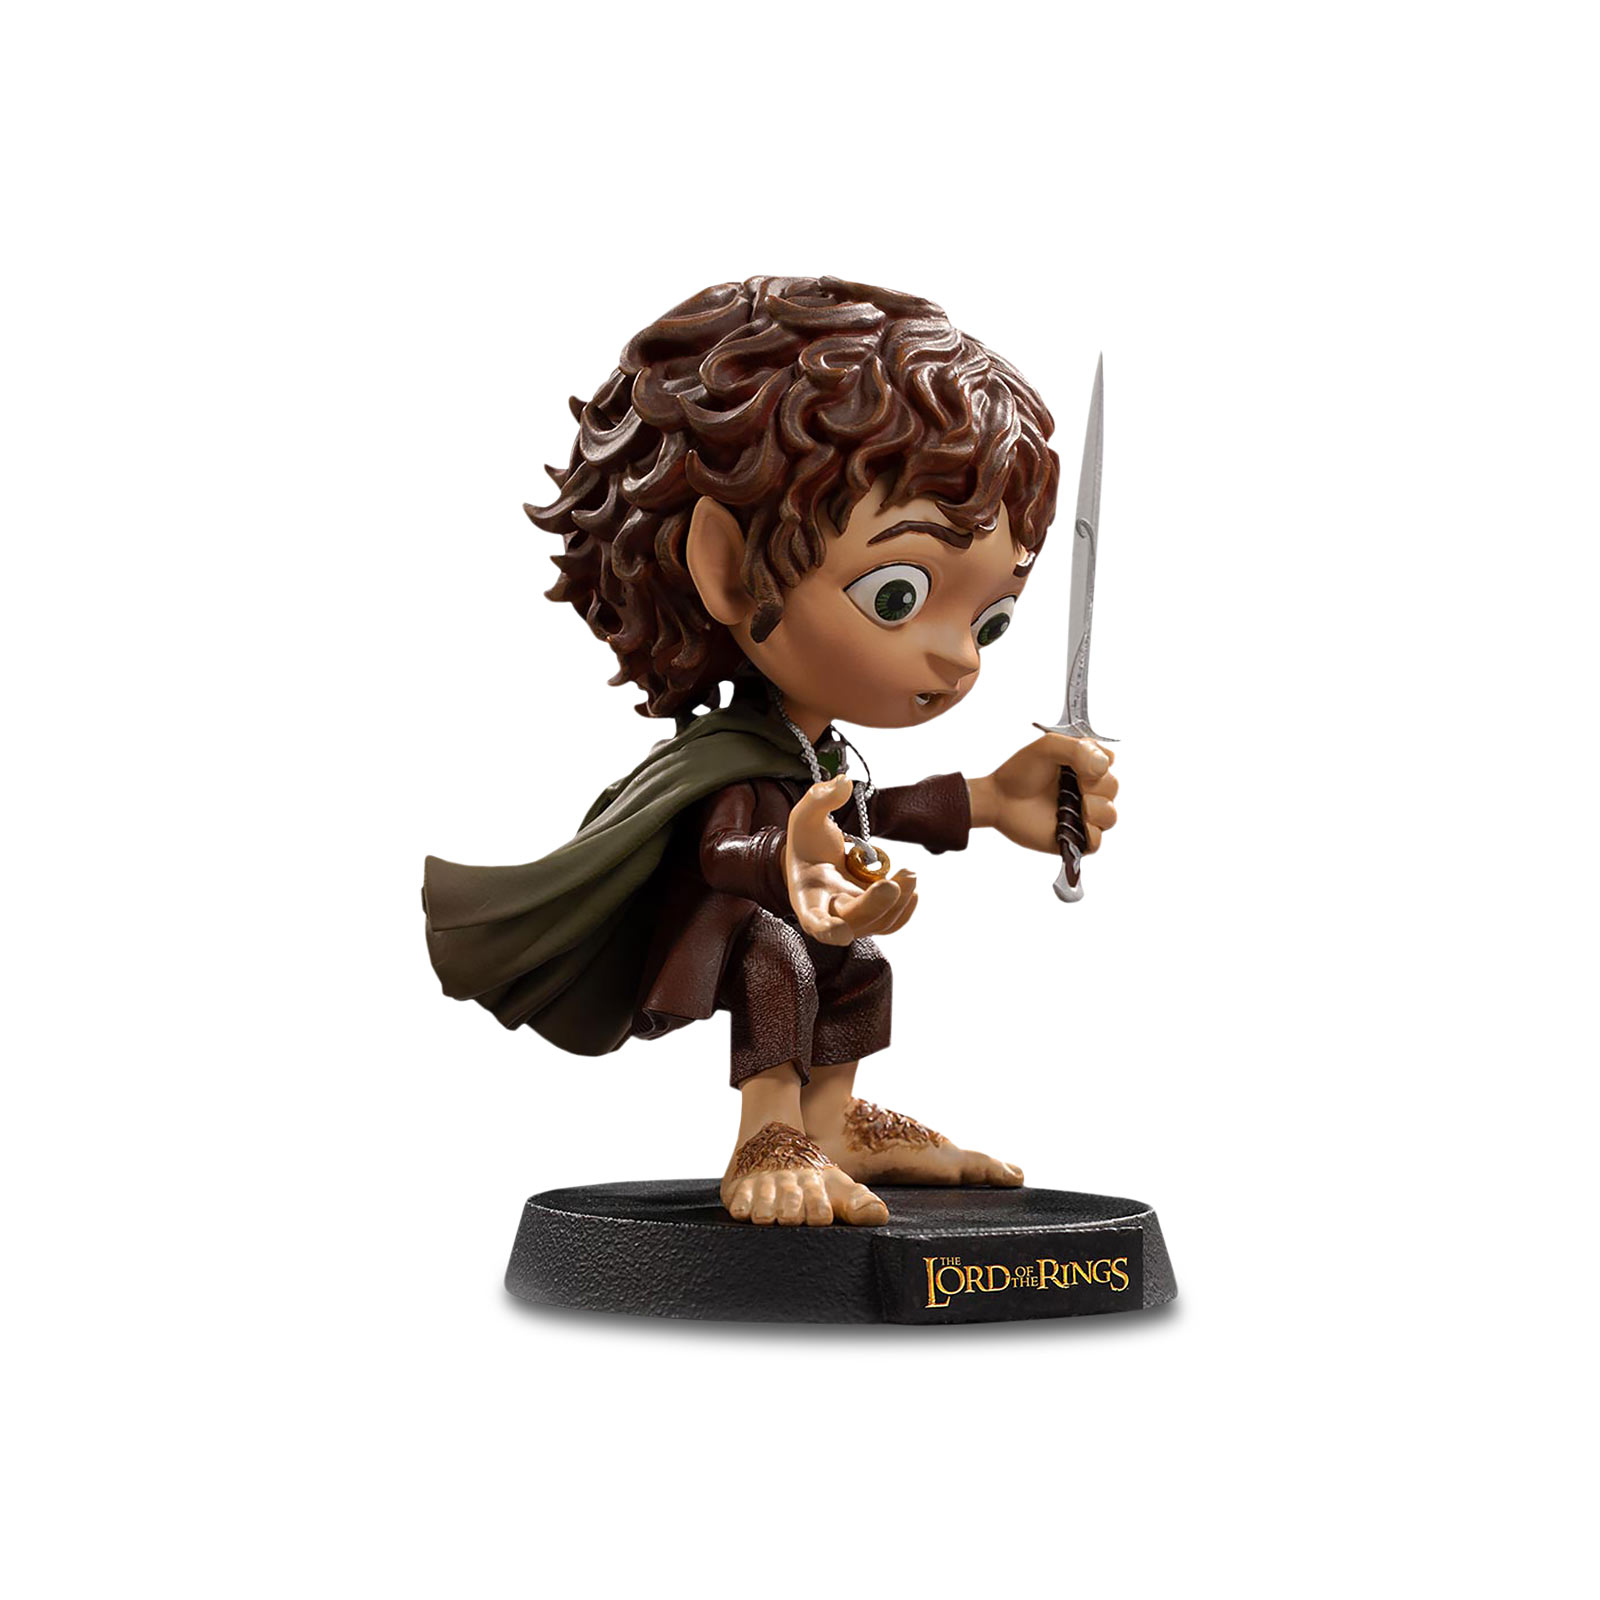 Herr der Ringe - Frodo Minico Figur